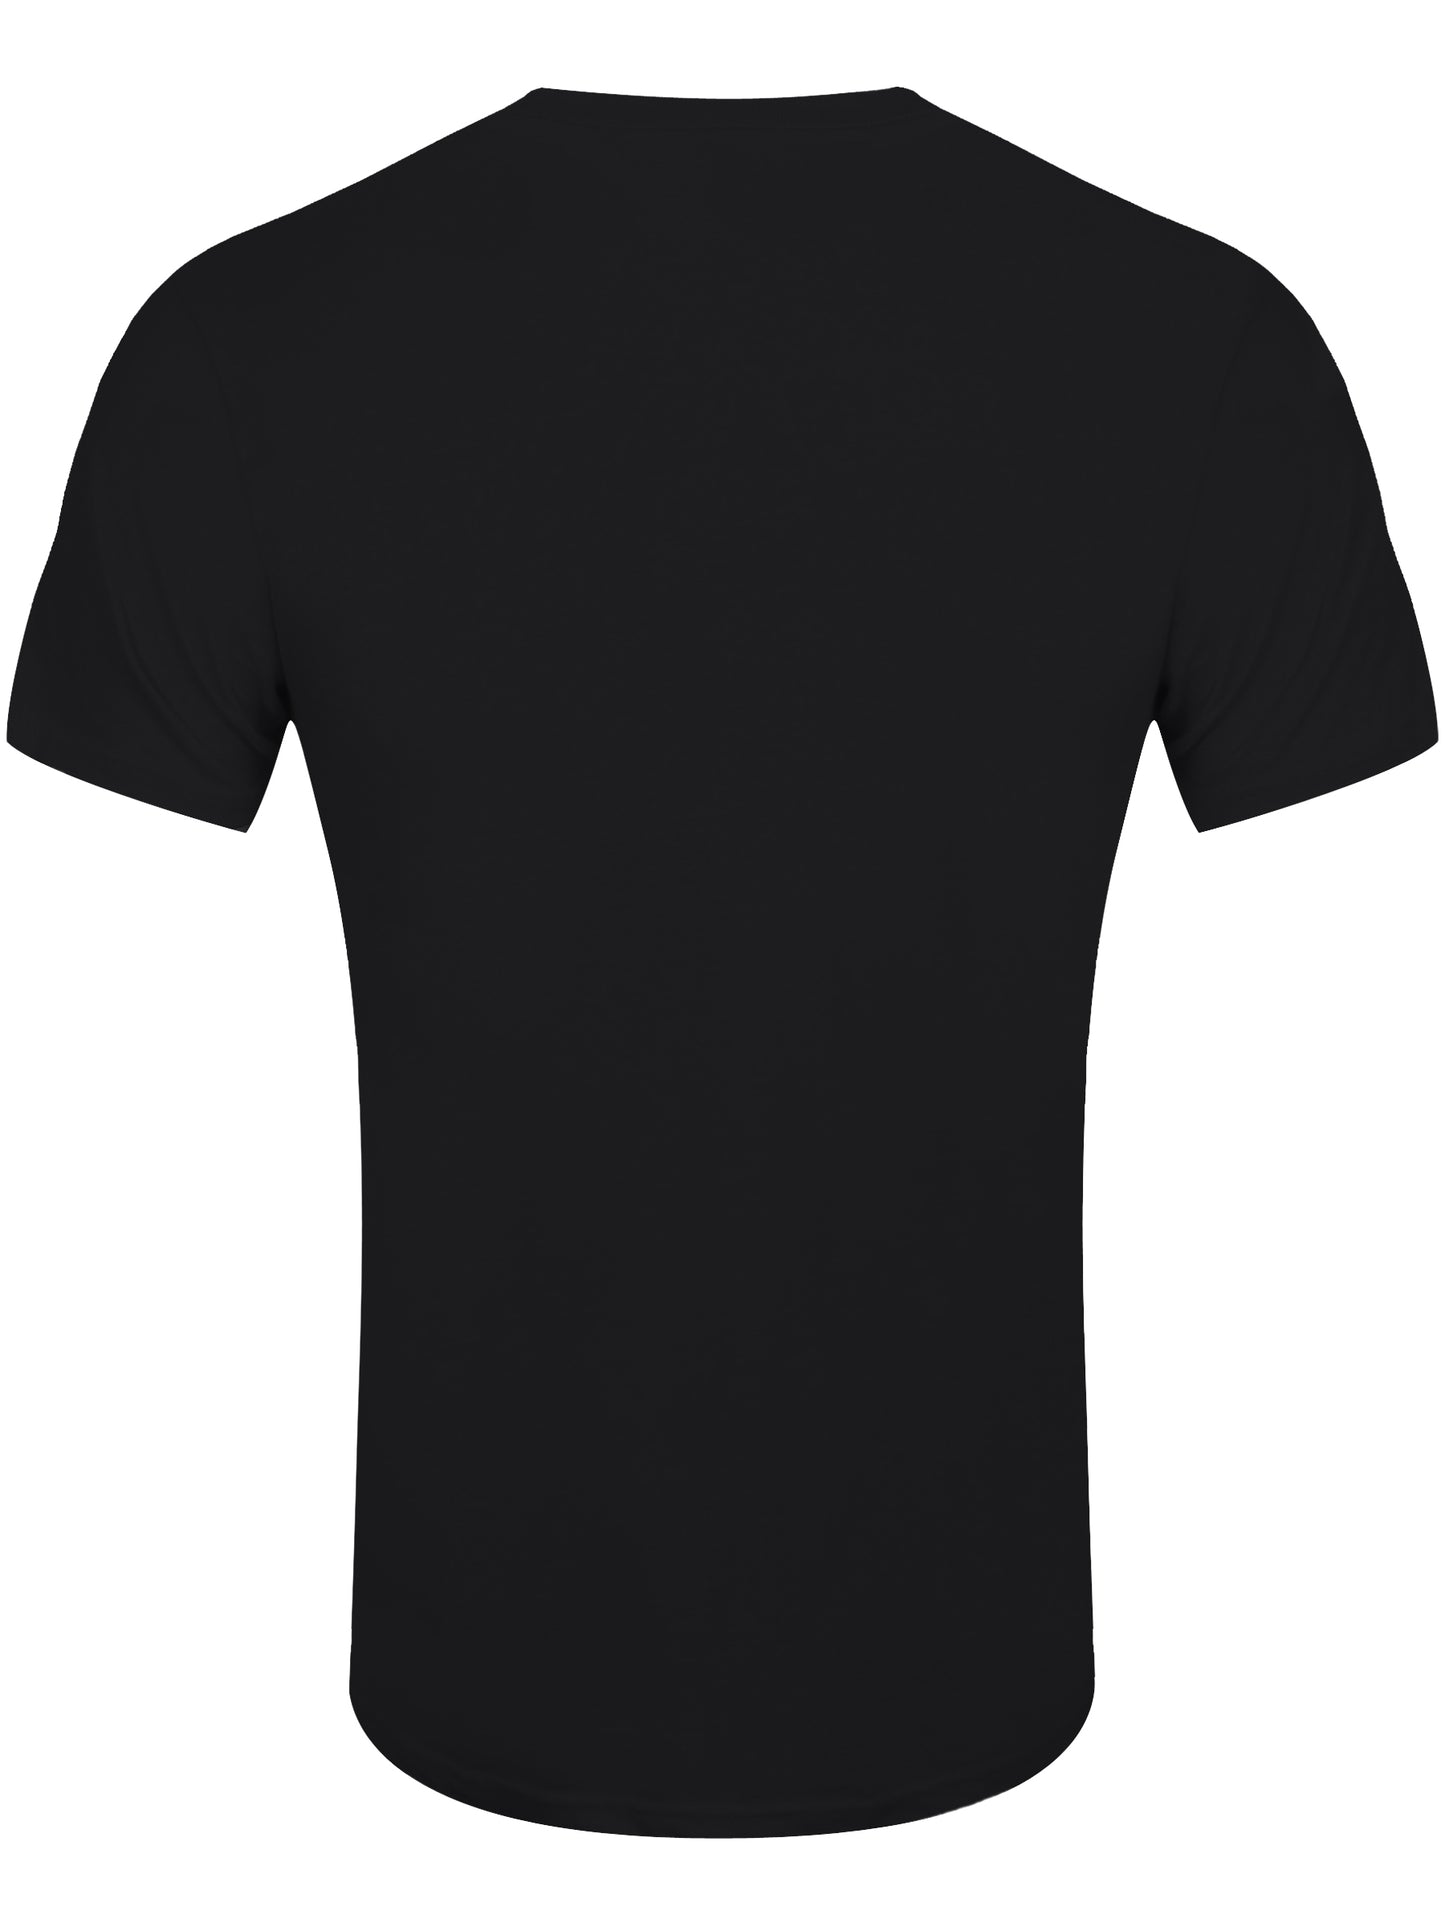 Led Zeppelin - Electric Magic Men's Black T-Shirt